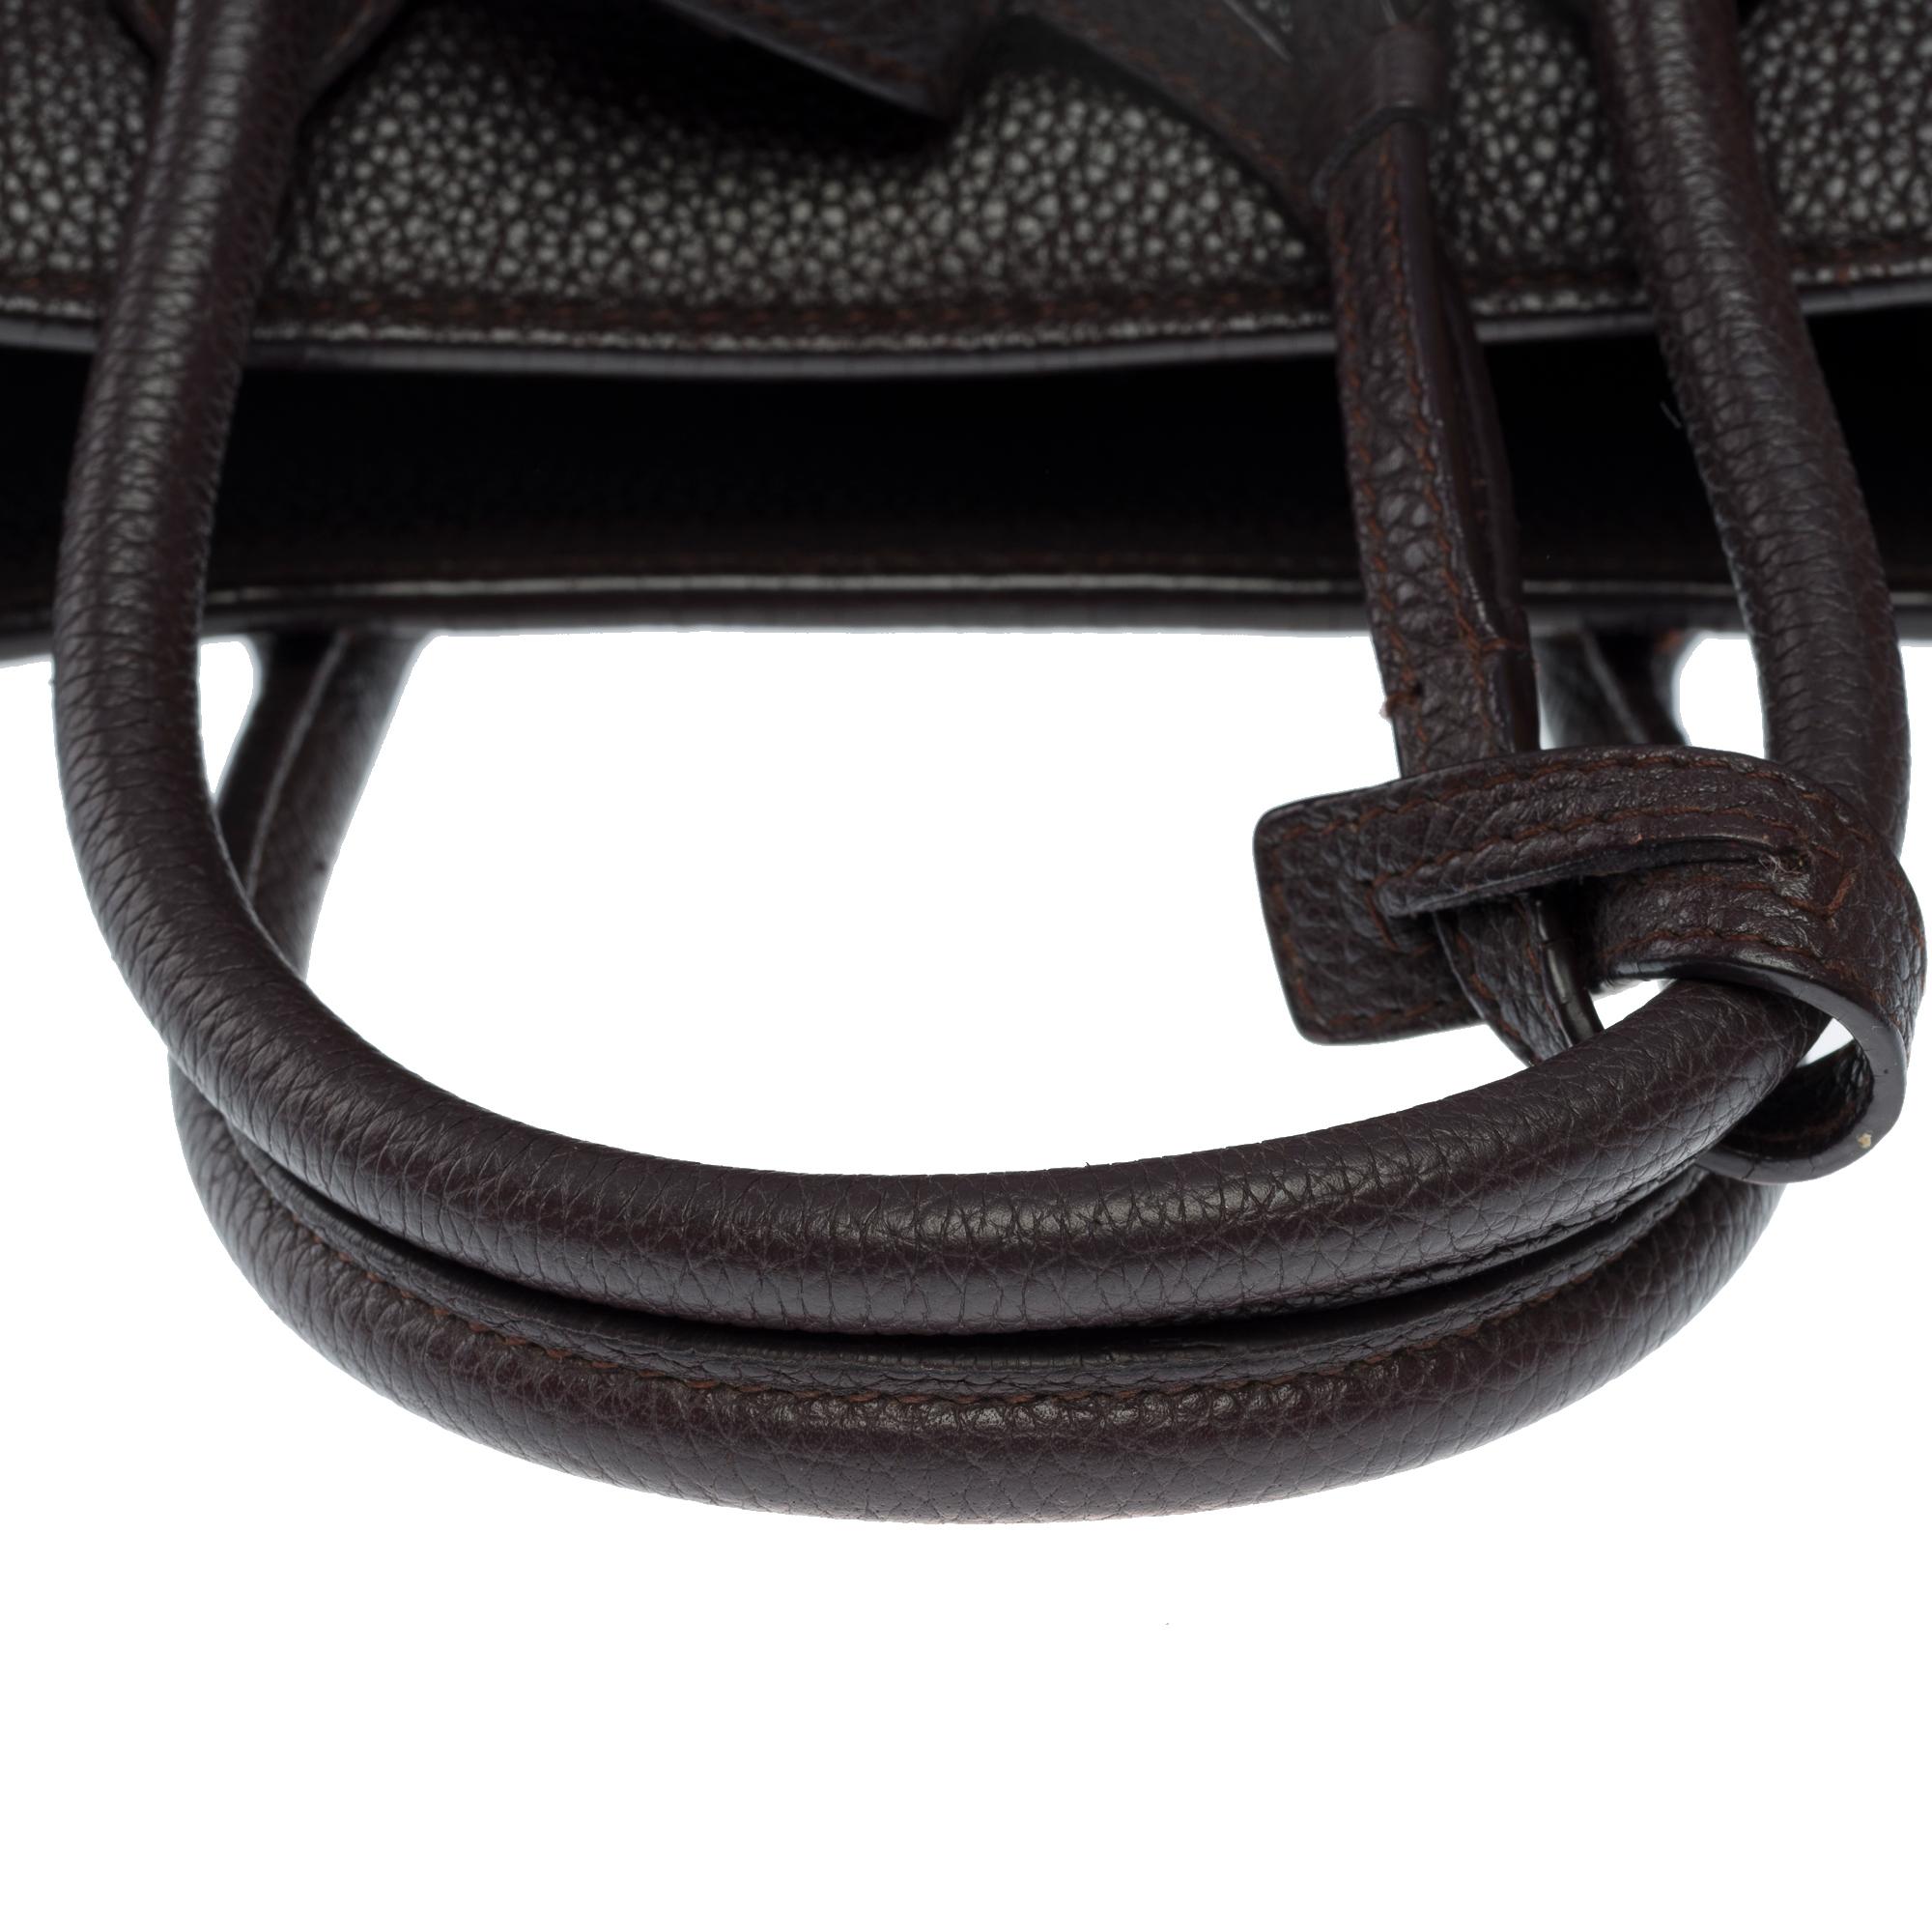 Saint Laurent Nano Sac de Jour handbag strap in burgundy grained leather, SHW For Sale 5